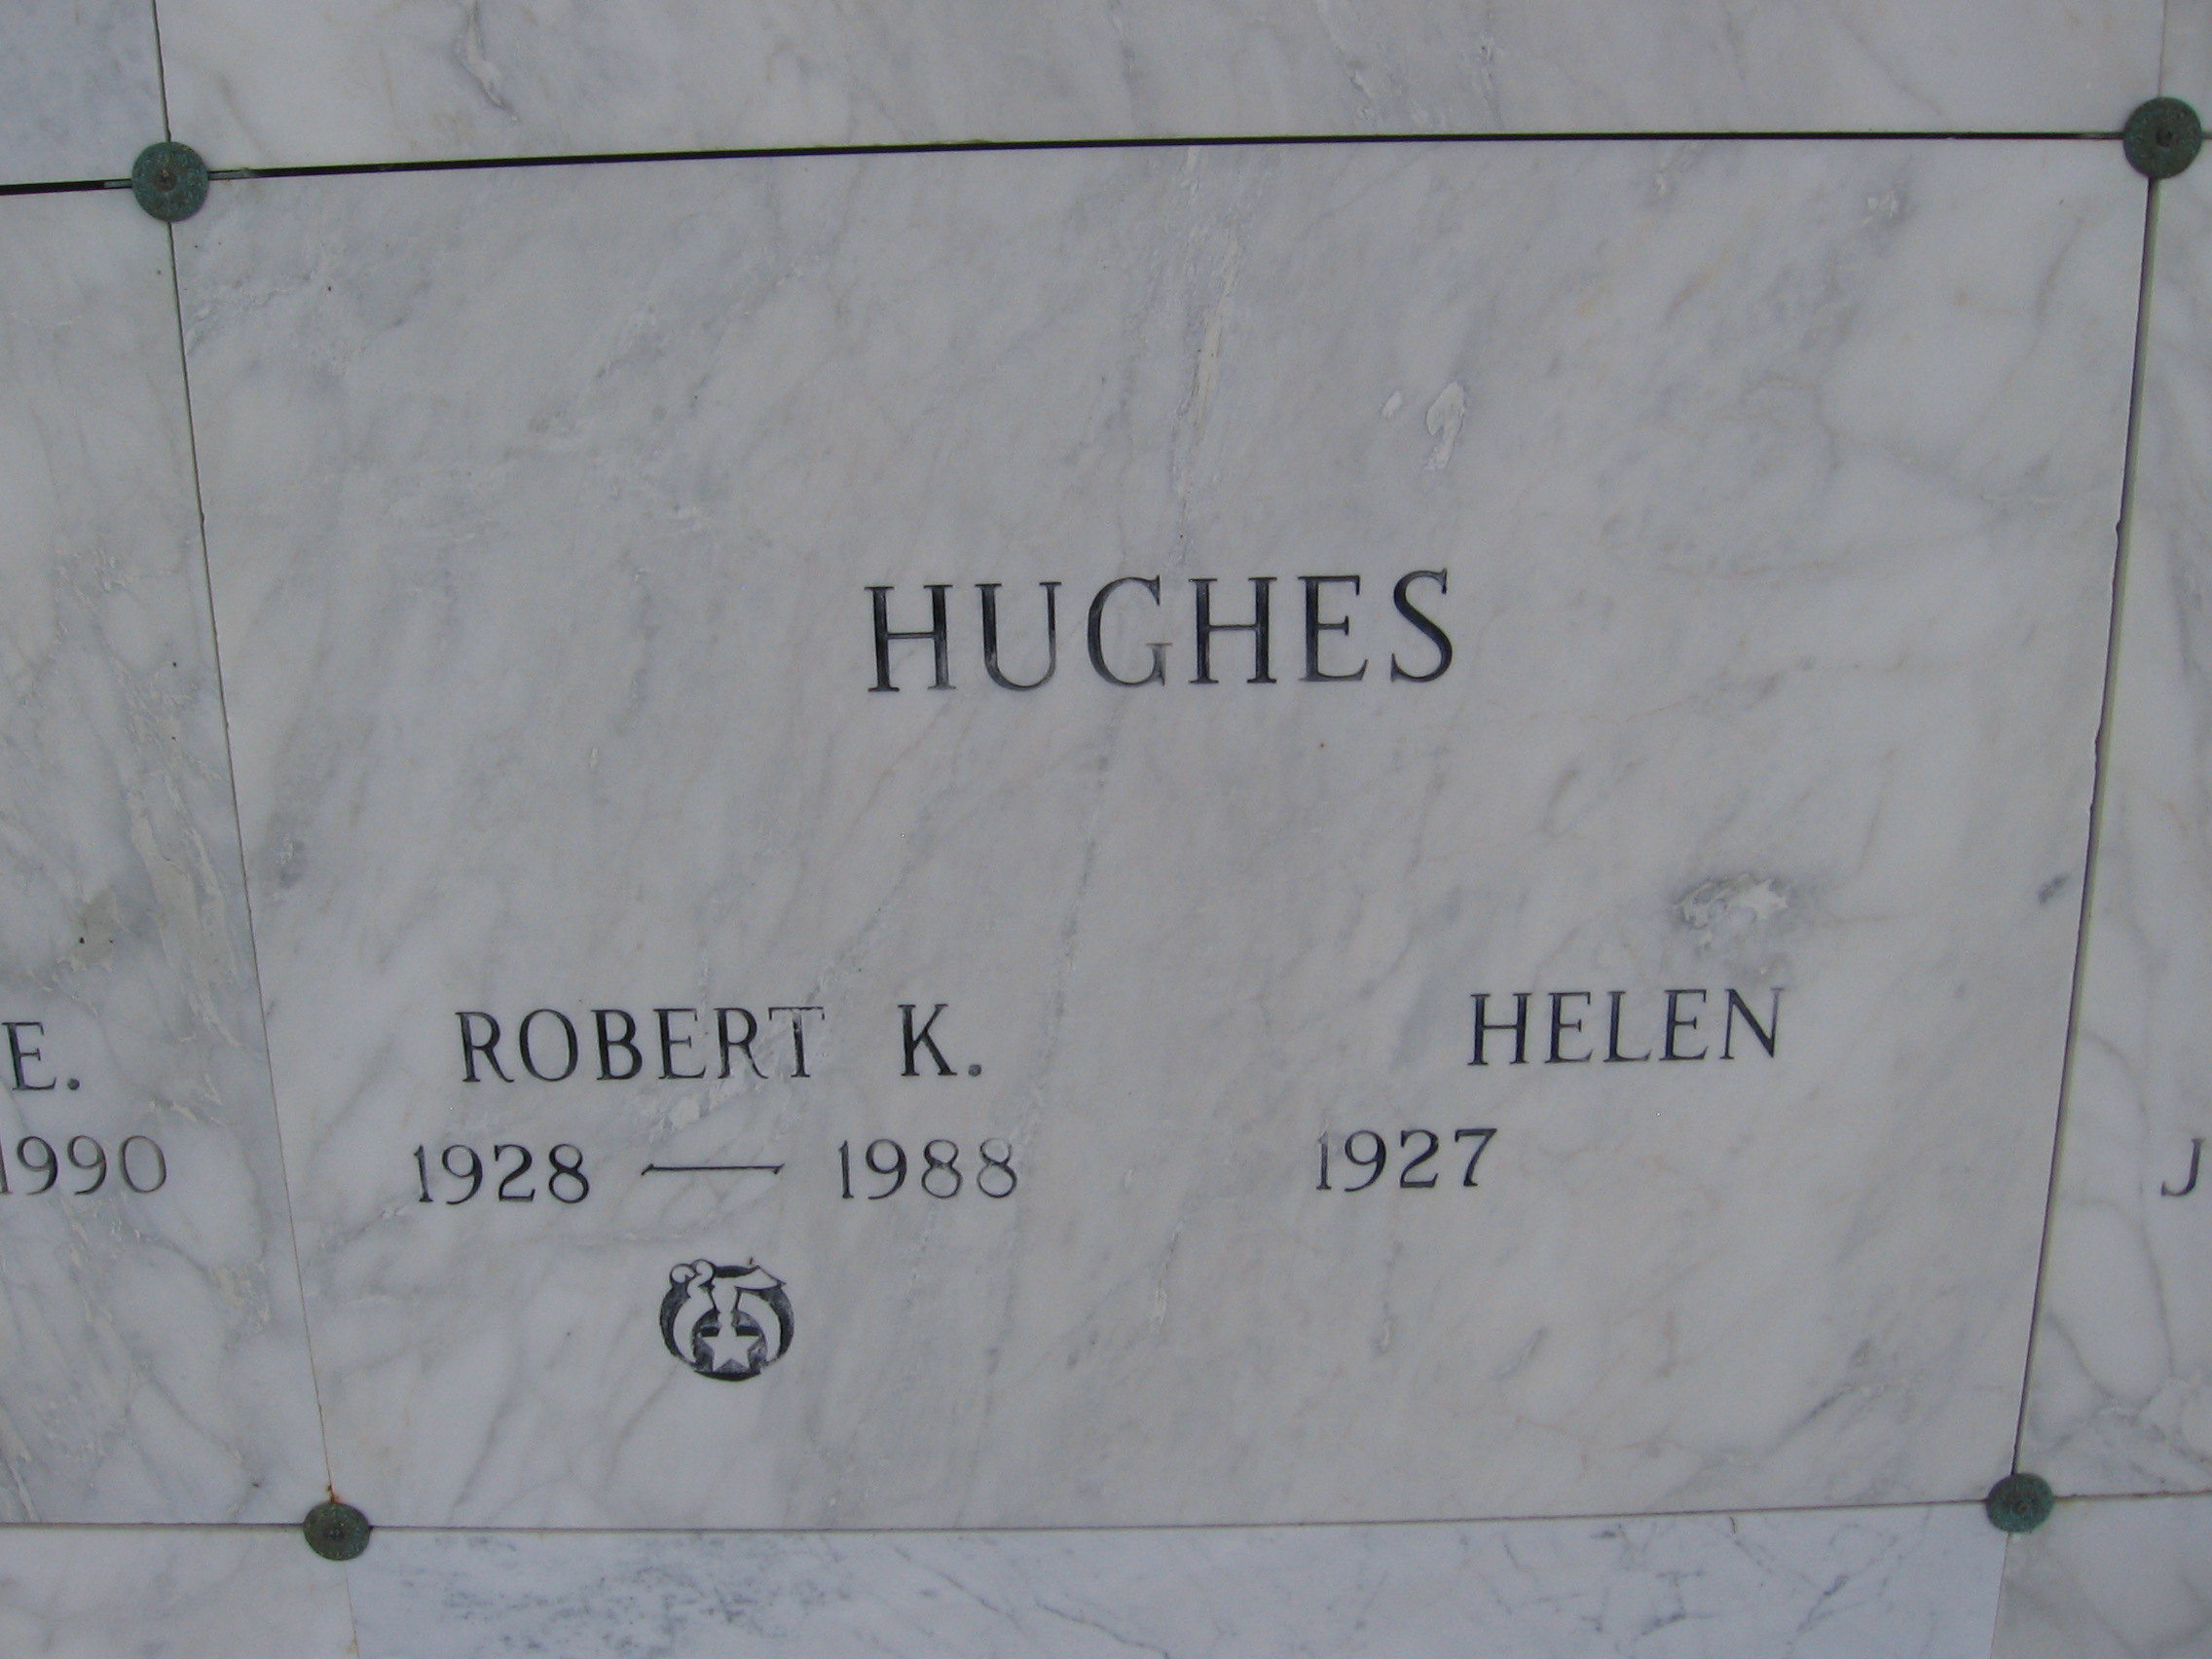 Robert K Hughes